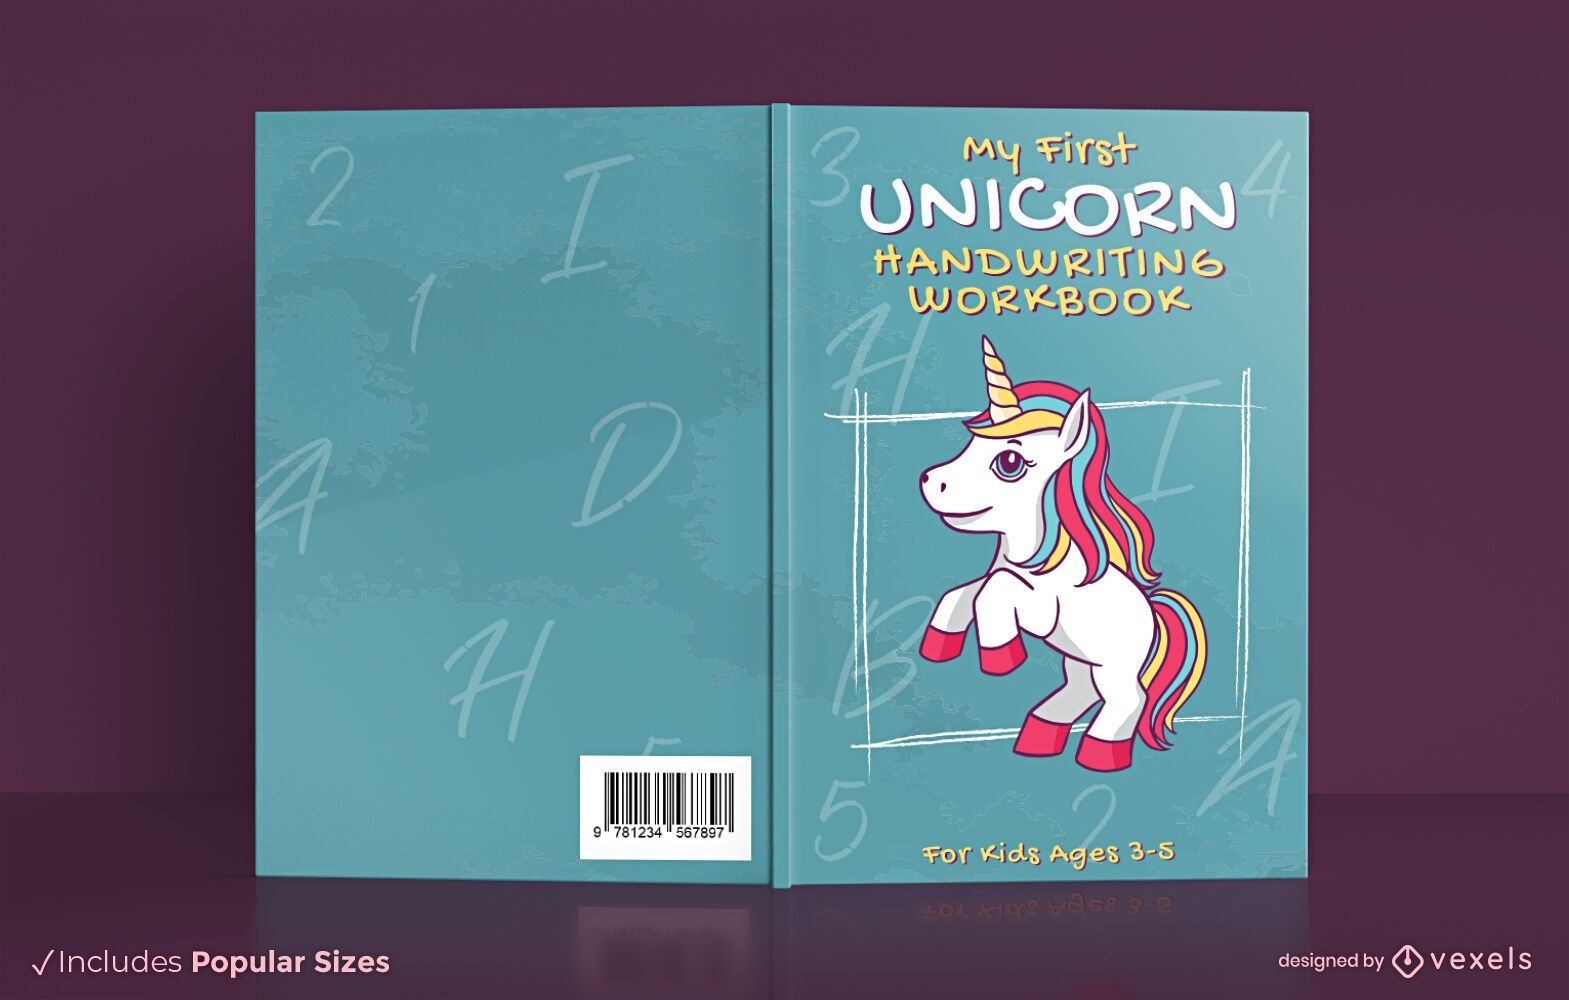 Unicorn handwriting work book cover design